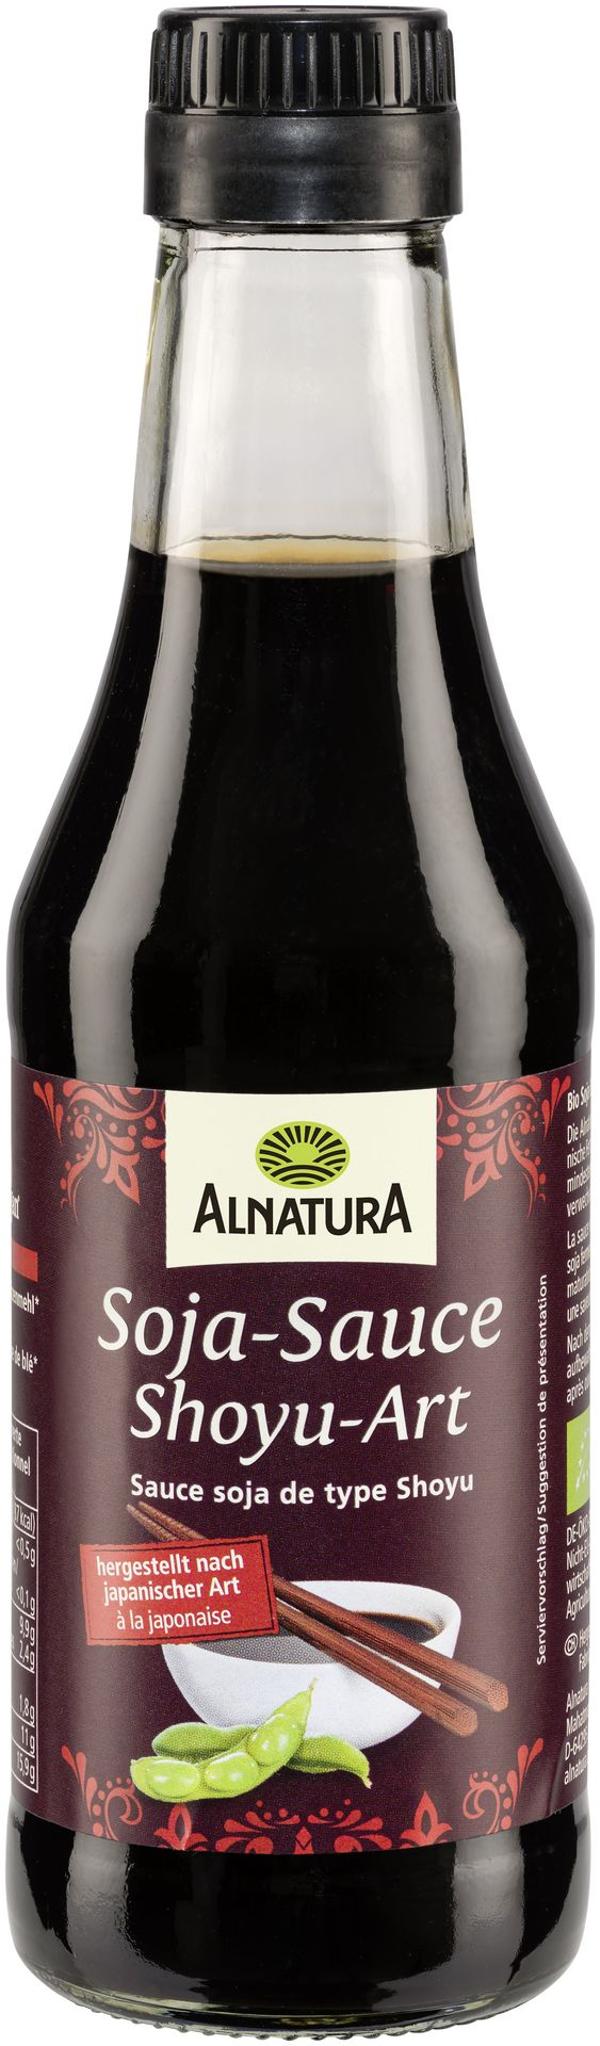 Produktfoto zu Soja Sauce Shoyu 250 ml Alnatura